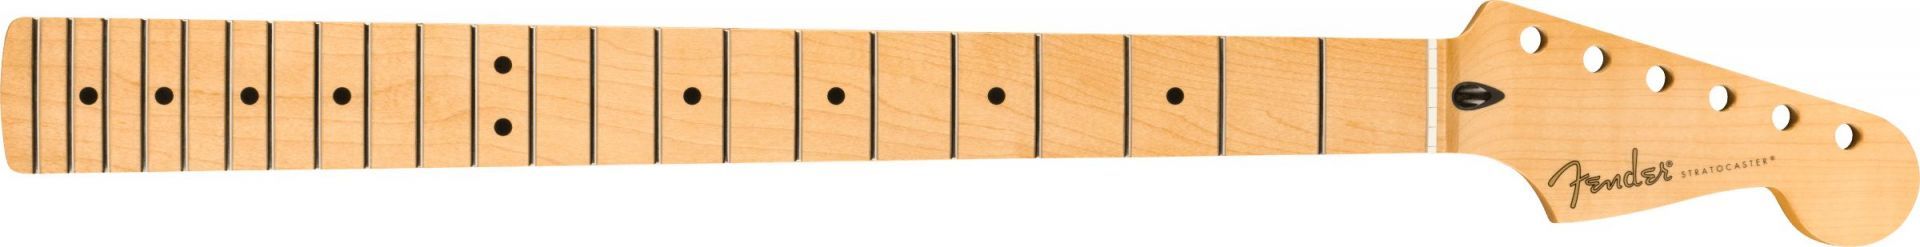 Fender Sub-Sonic Baritone Stratocaster Neck 22 Medium Jumbo Frets Maple